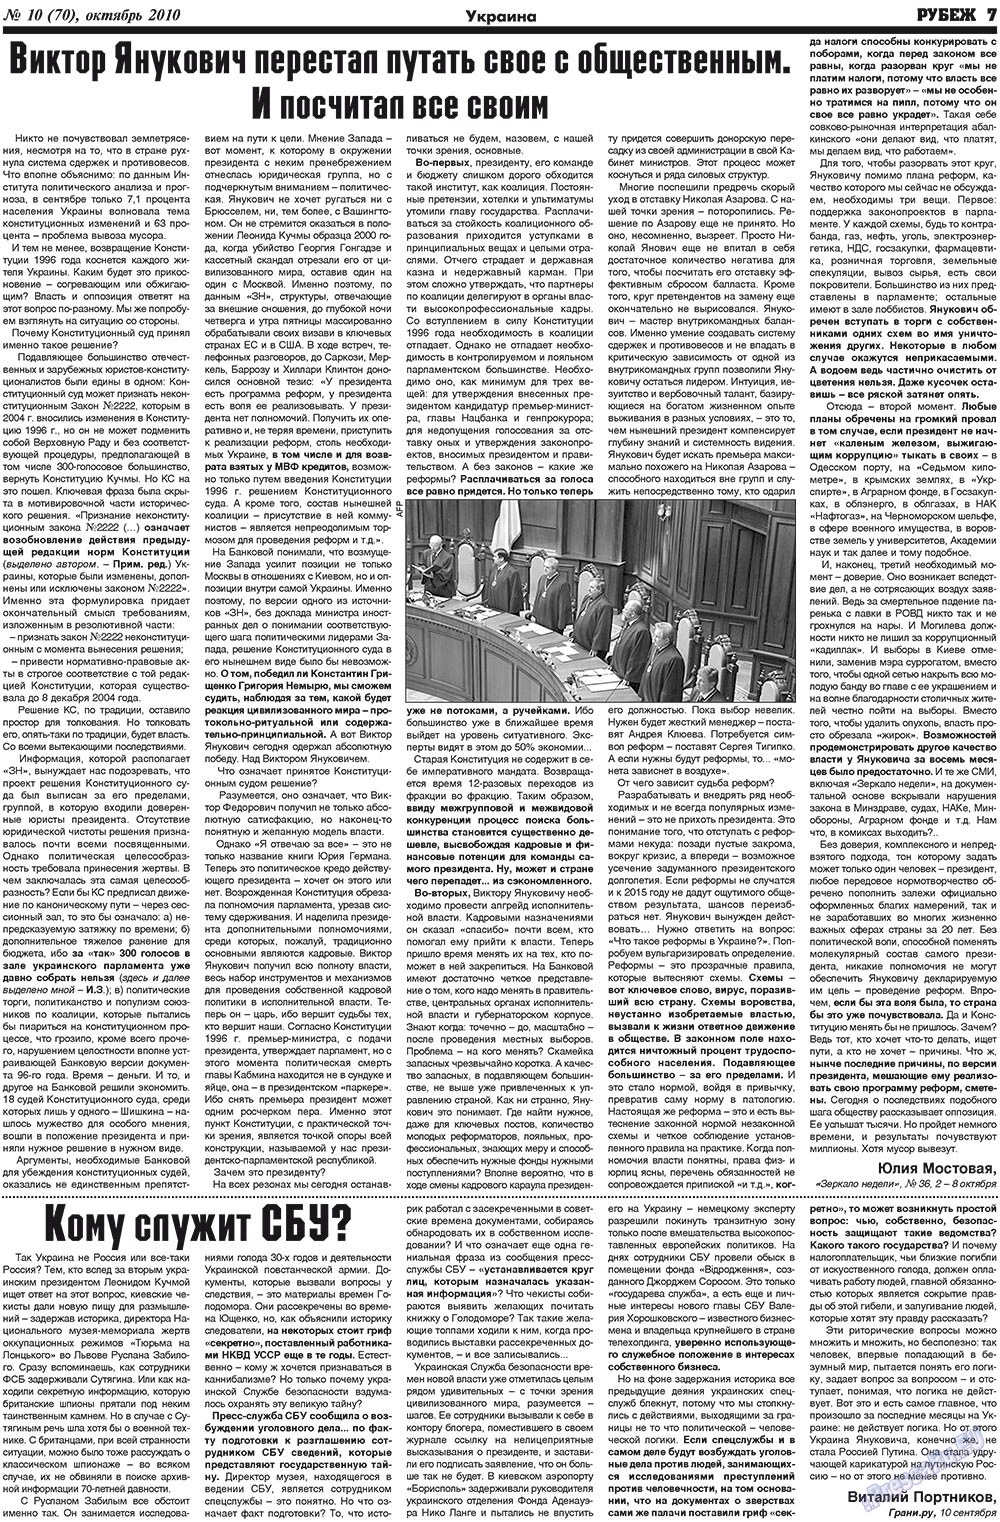 Рубеж, газета. 2010 №10 стр.7